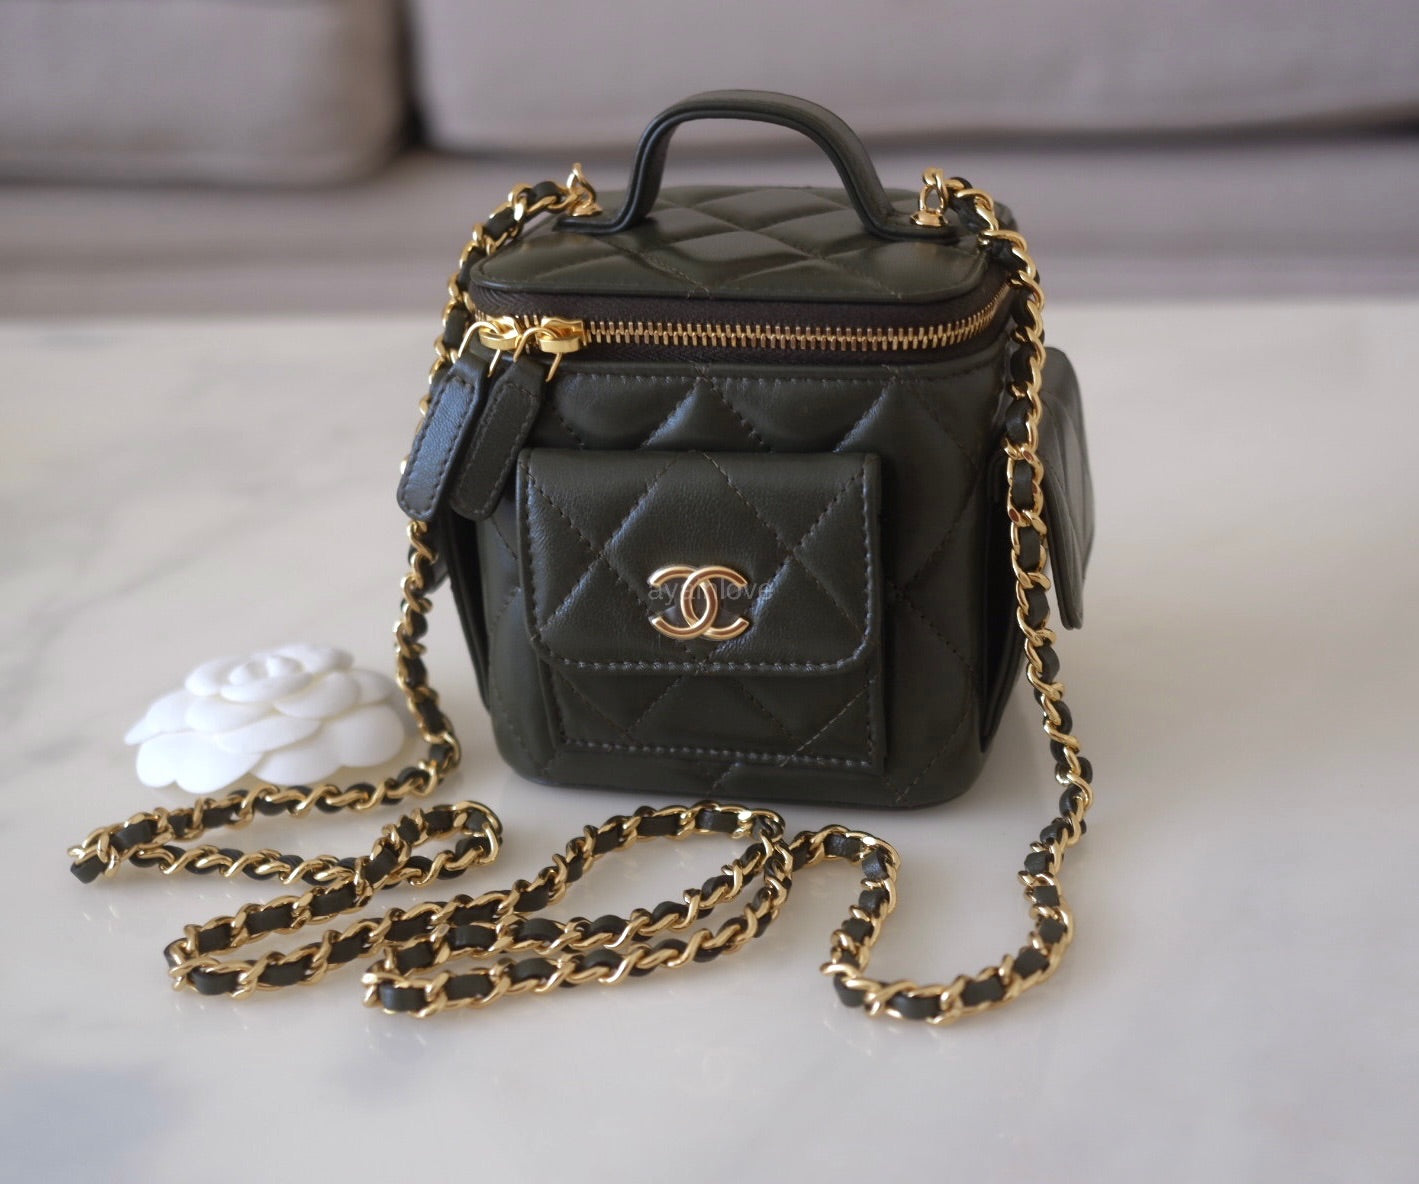 Chanel rectangular box bag